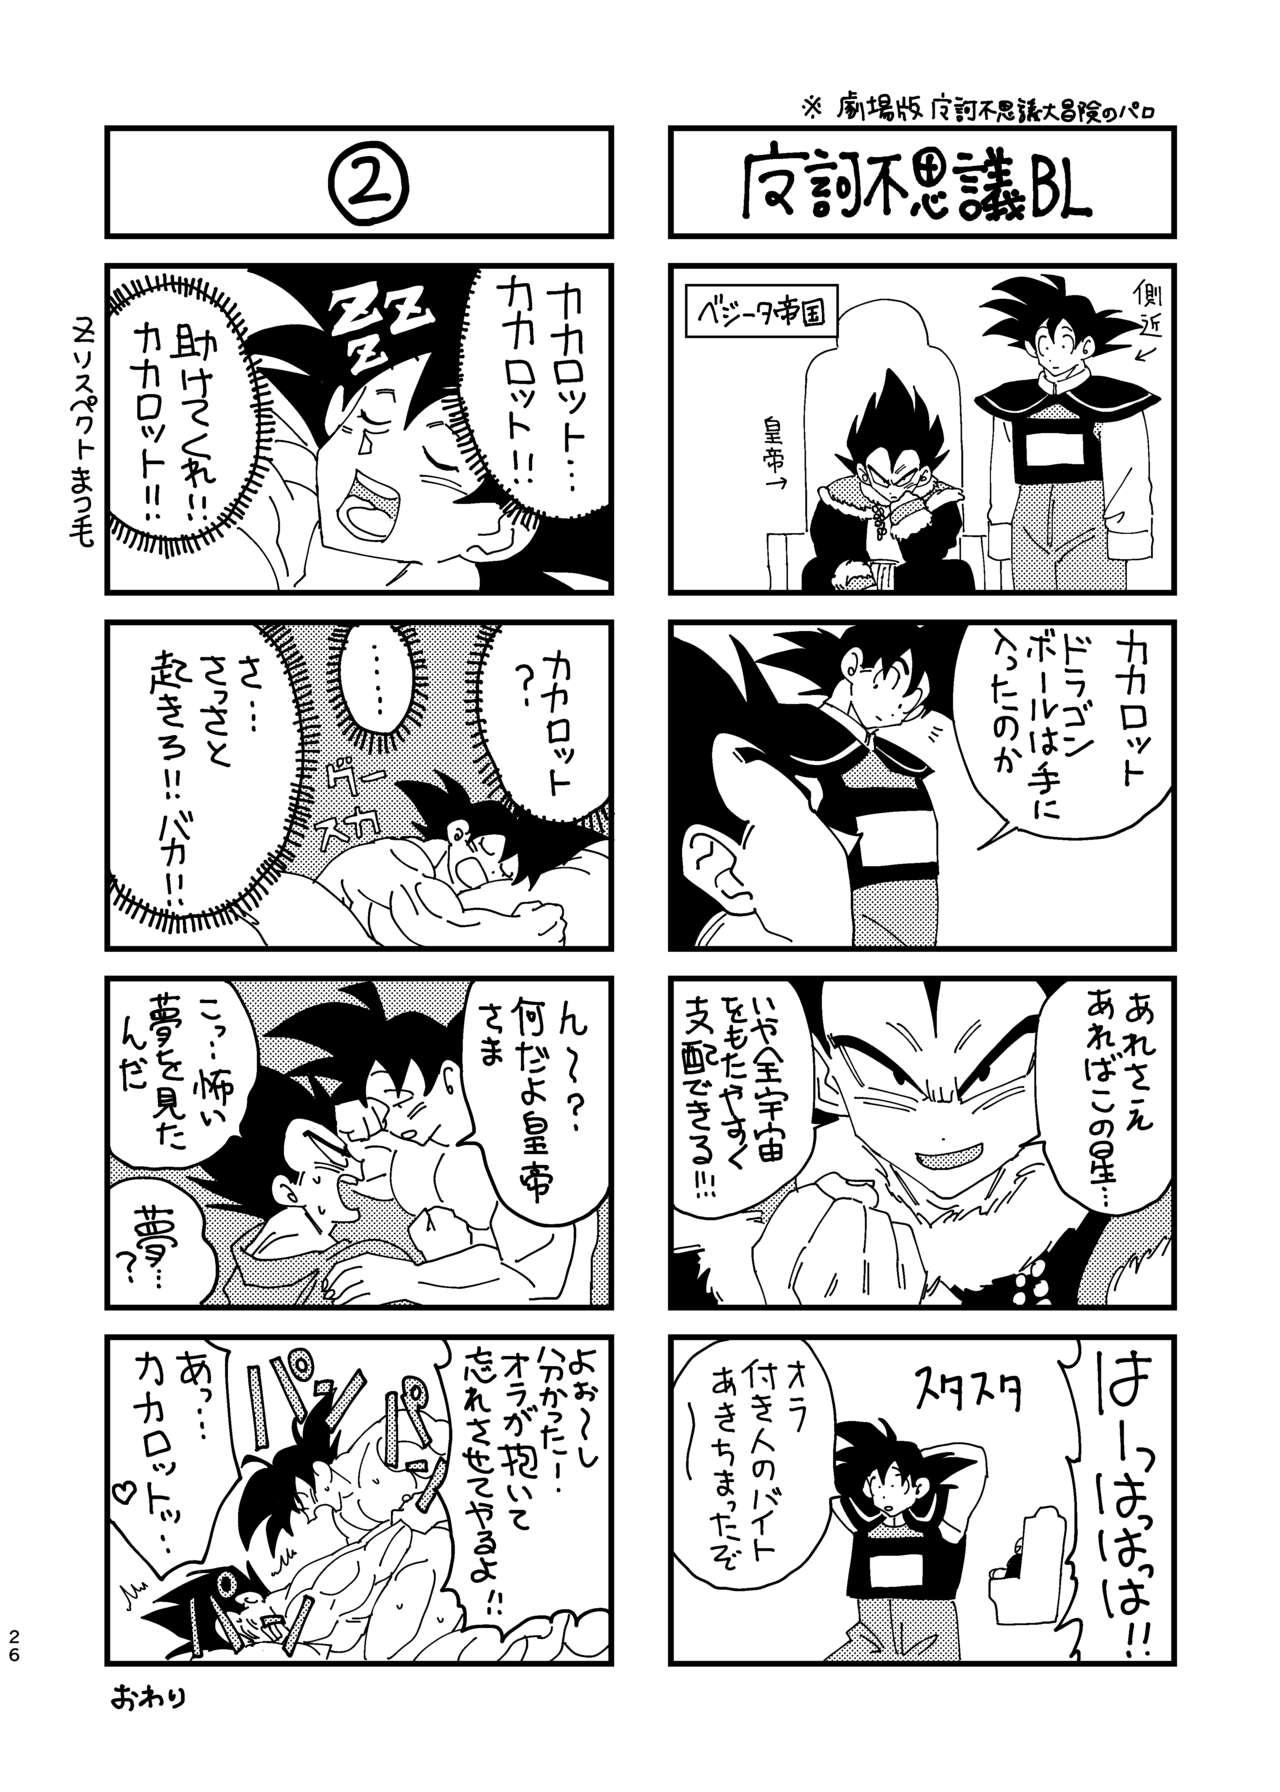 【Web Reprint】Goku and Vegeta Boys Love 21